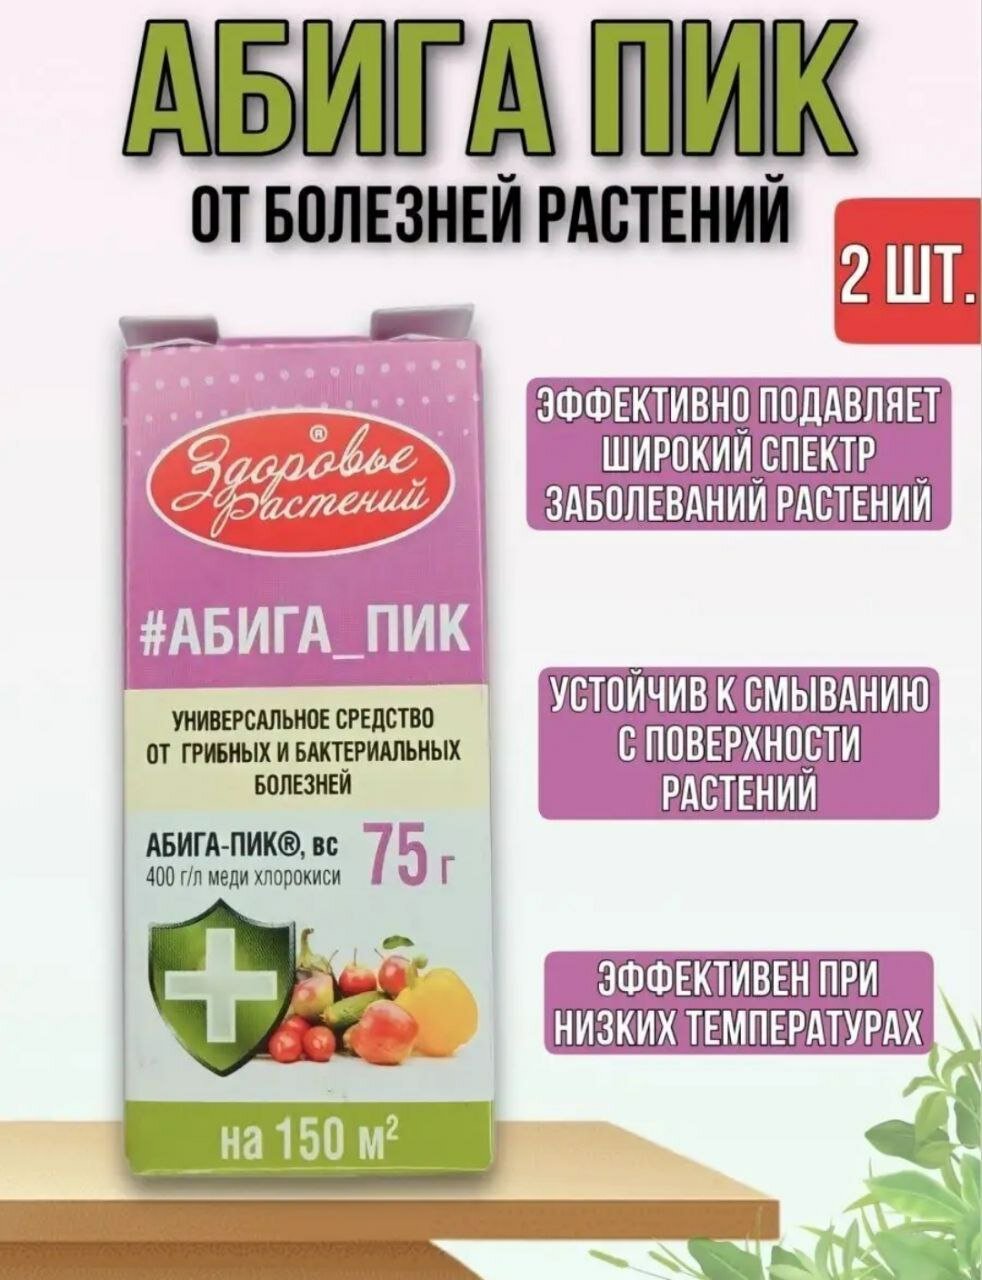 "Защита от болезней" - удобрение и фунгицид от бренда Абига Пик